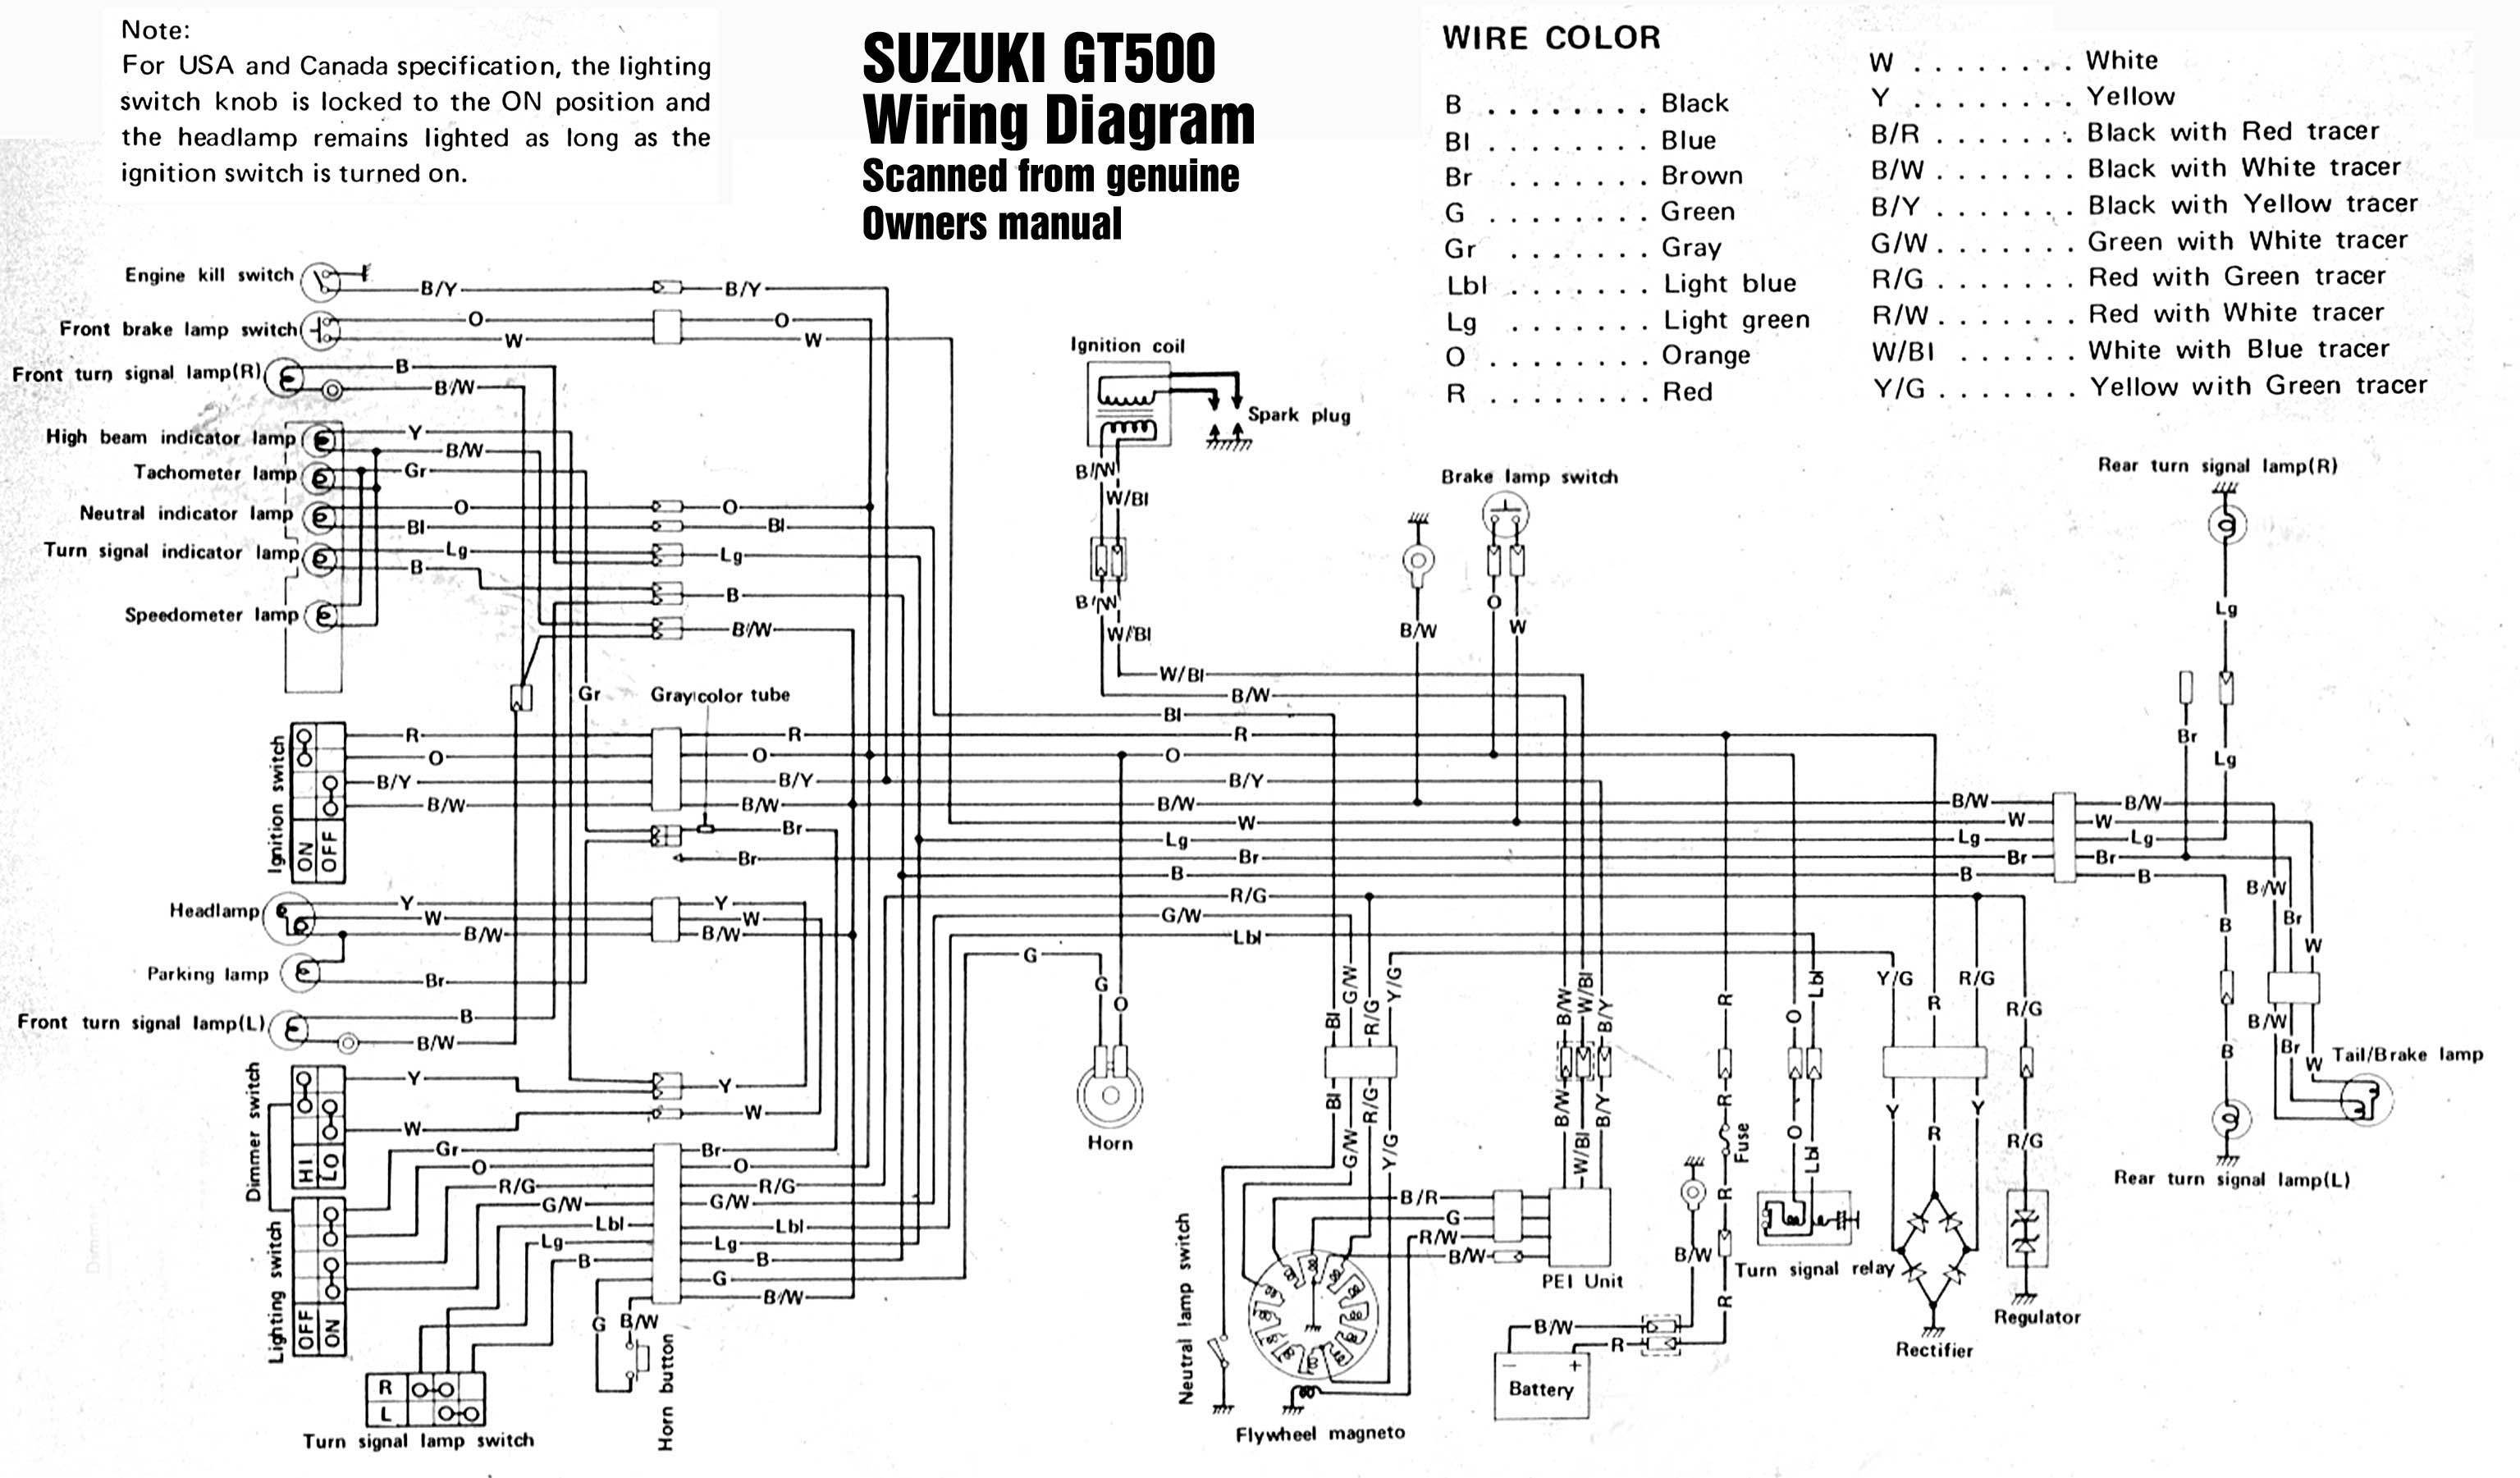 Wiring diagrams - Page 2 - Suzuki 2 Strokes